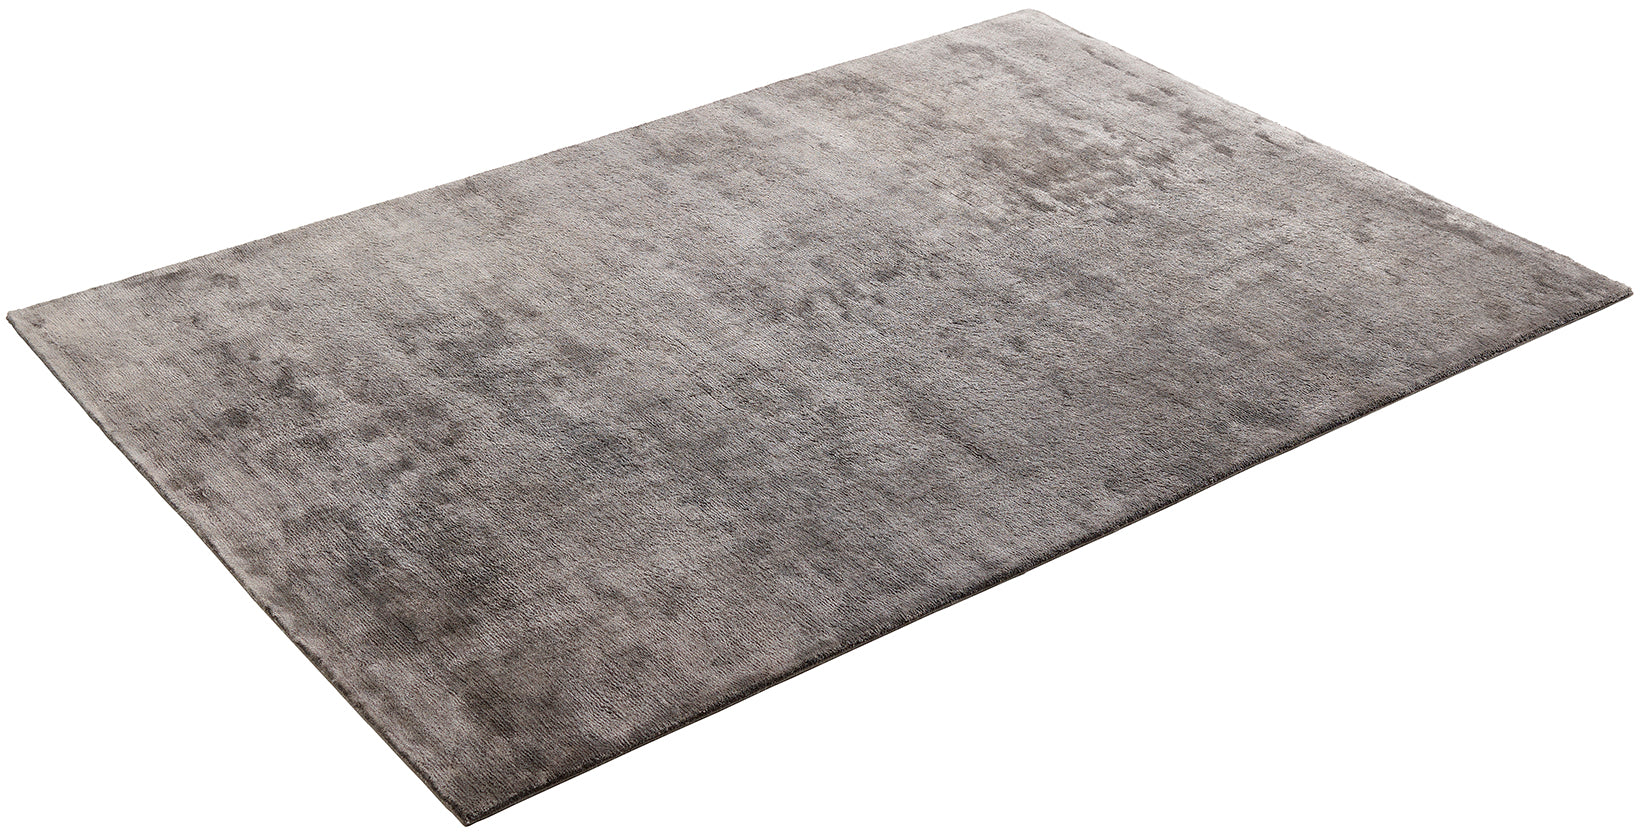 large plain grey and black rug
